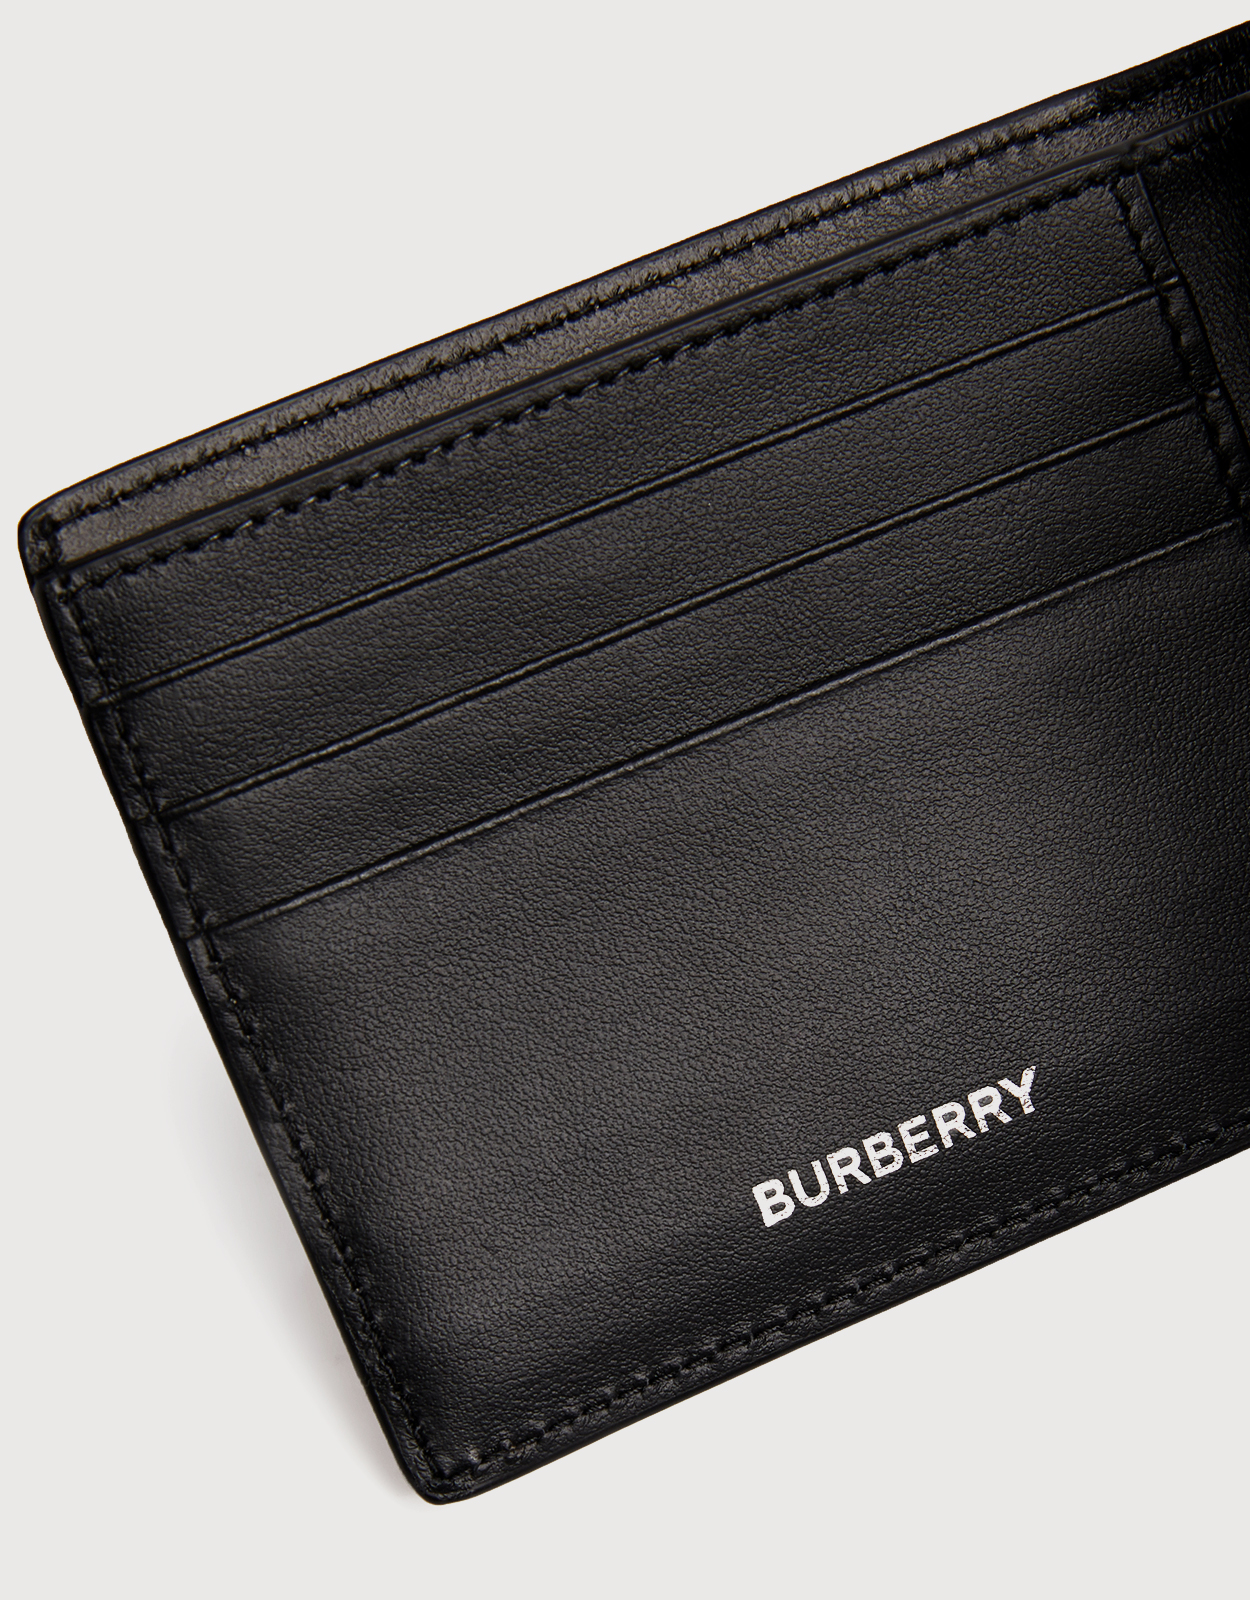 Burberry Man's Vintage Check Bi-Fold Coin Wallet